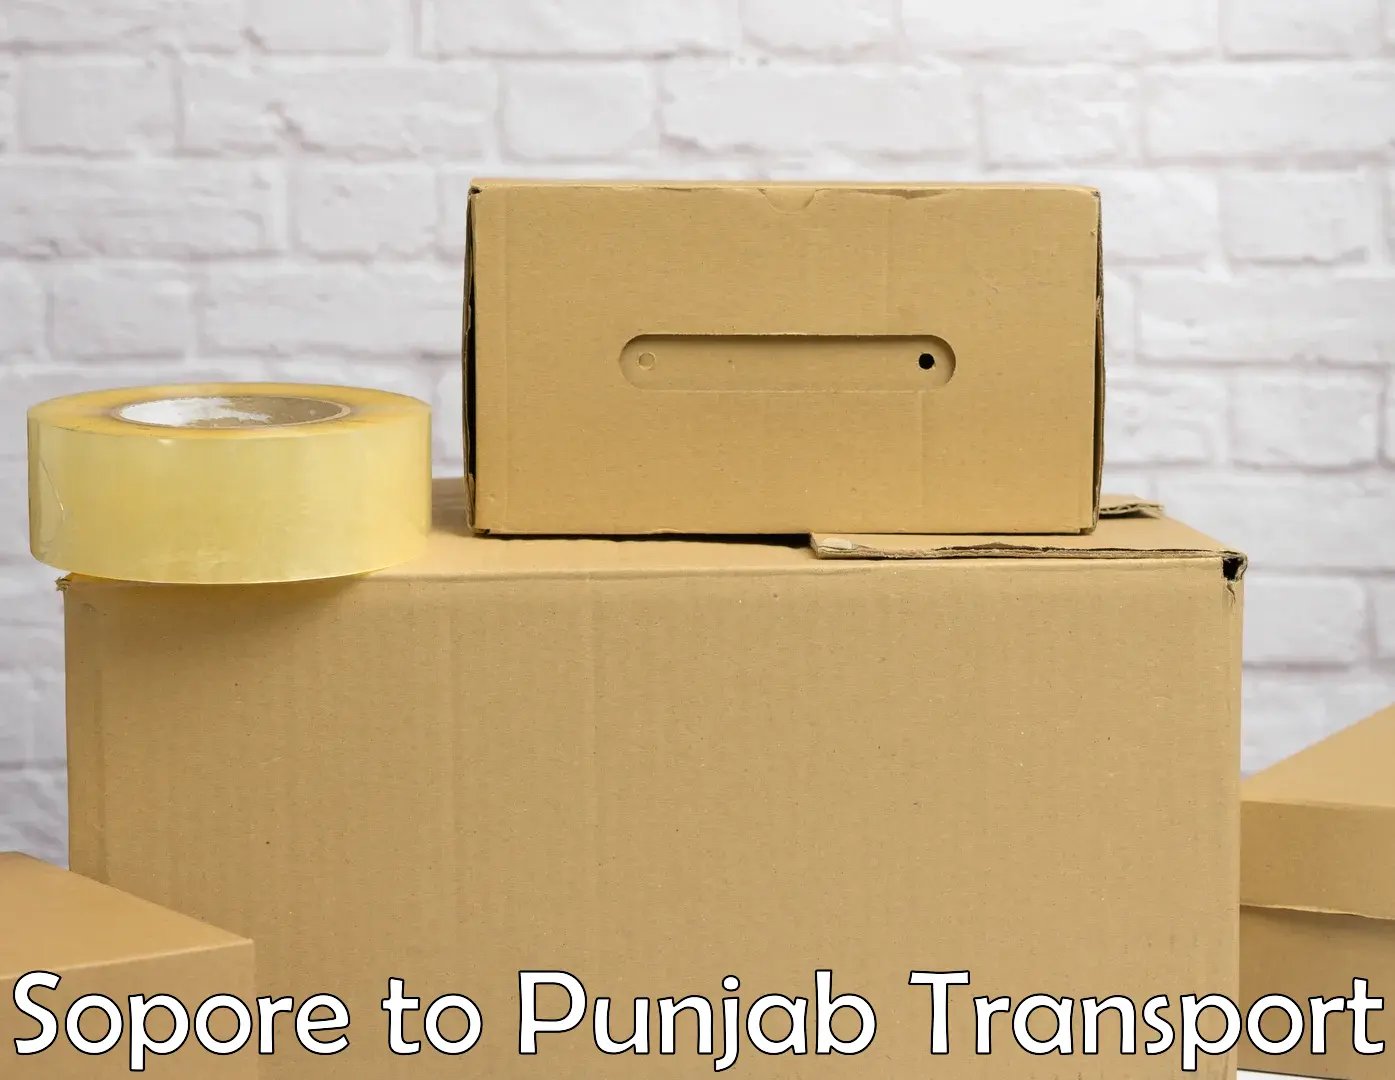 Container transport service Sopore to Rupnagar